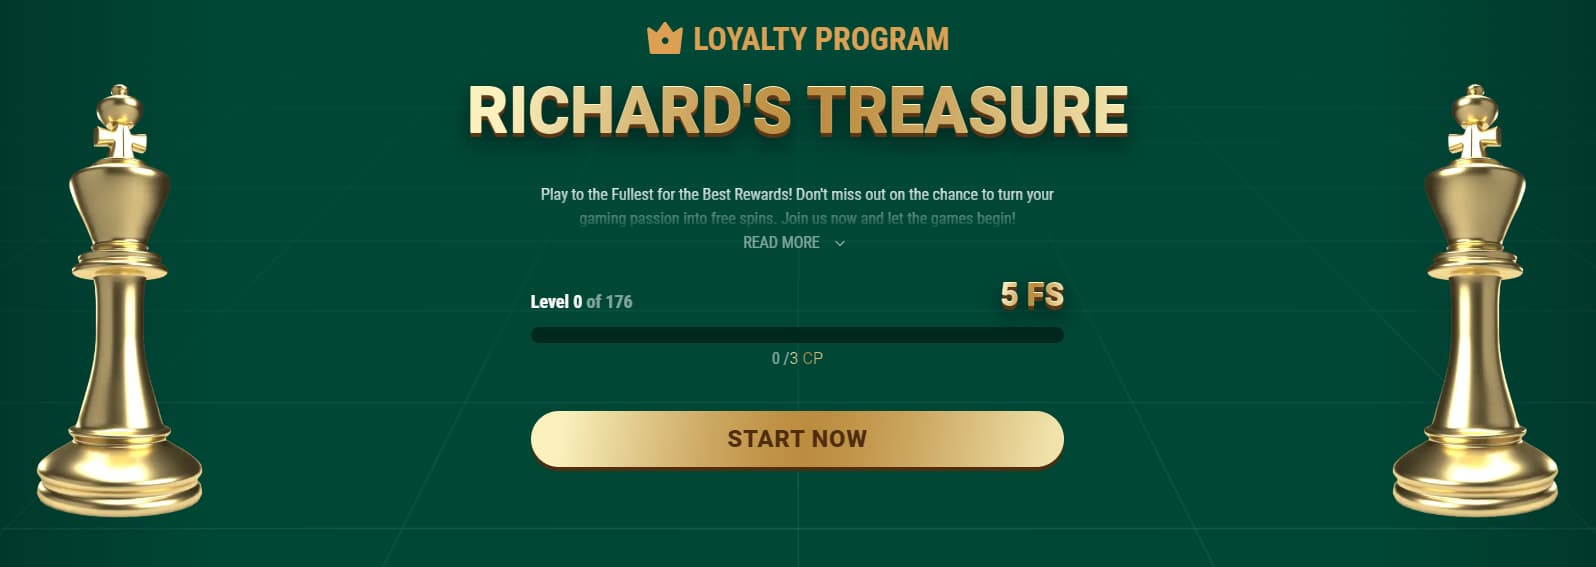 richard casino loyalty program